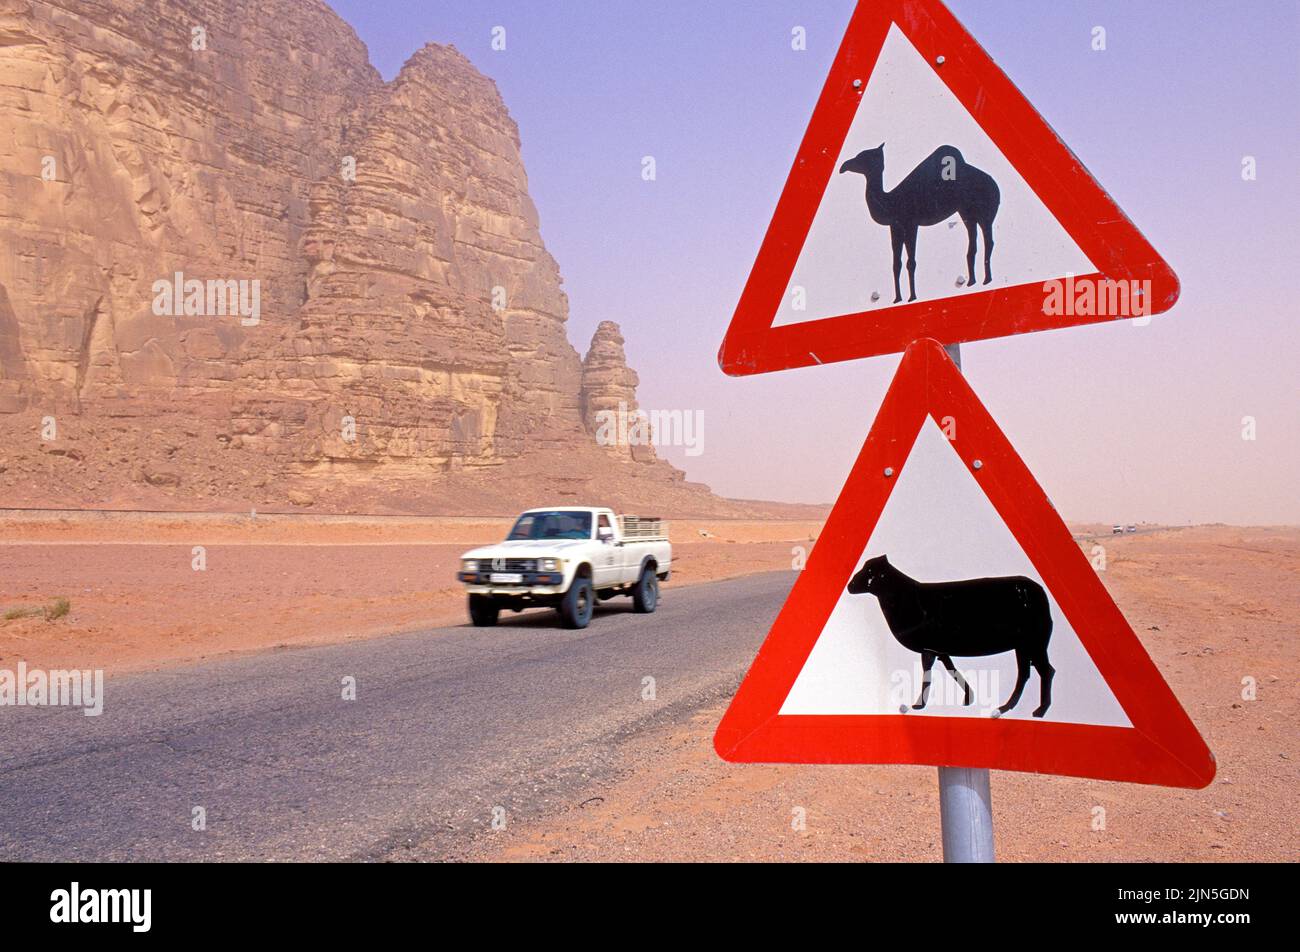 Jordania, Wadi Rum Desert, señalización vial Foto de stock